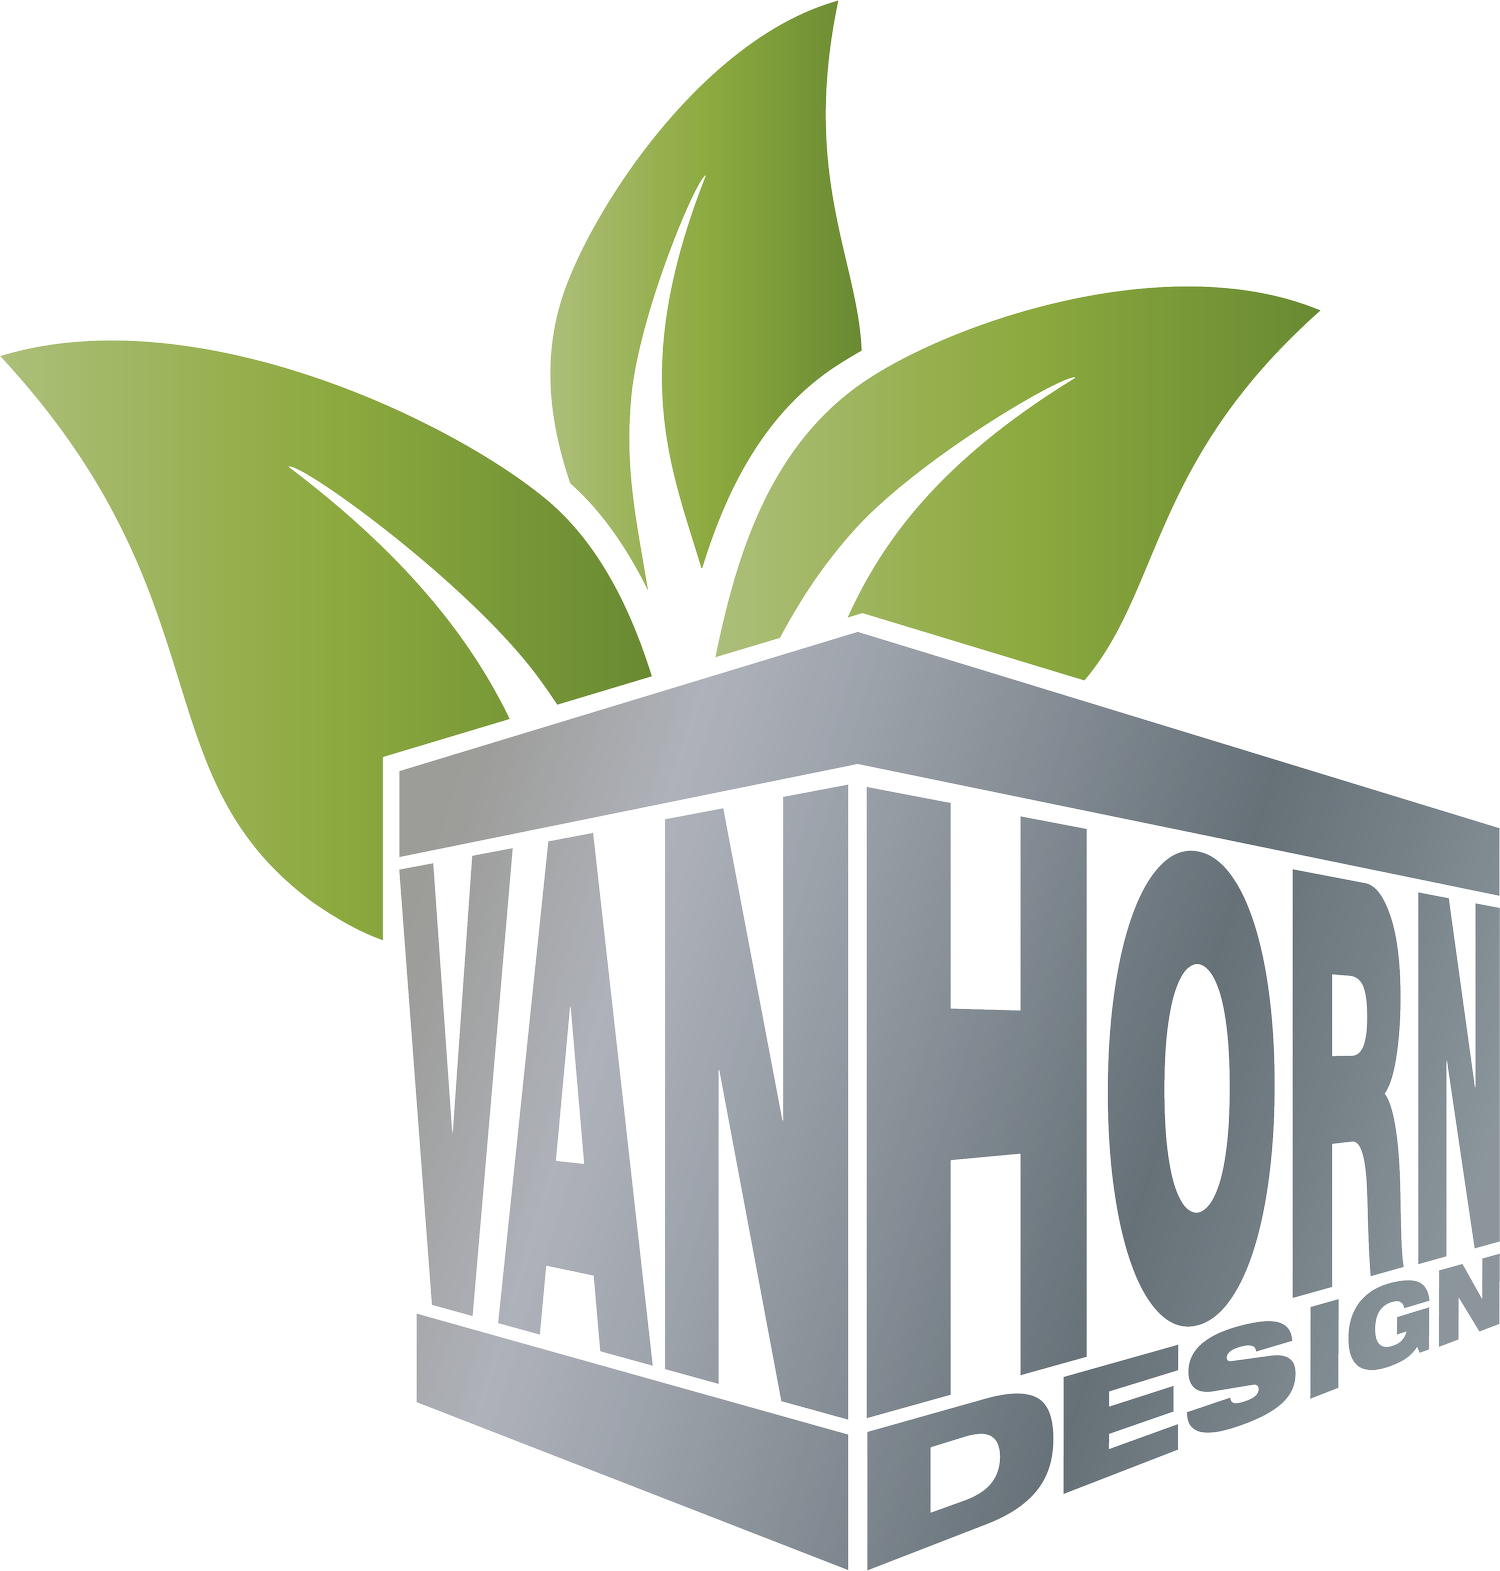 VanHorn Design